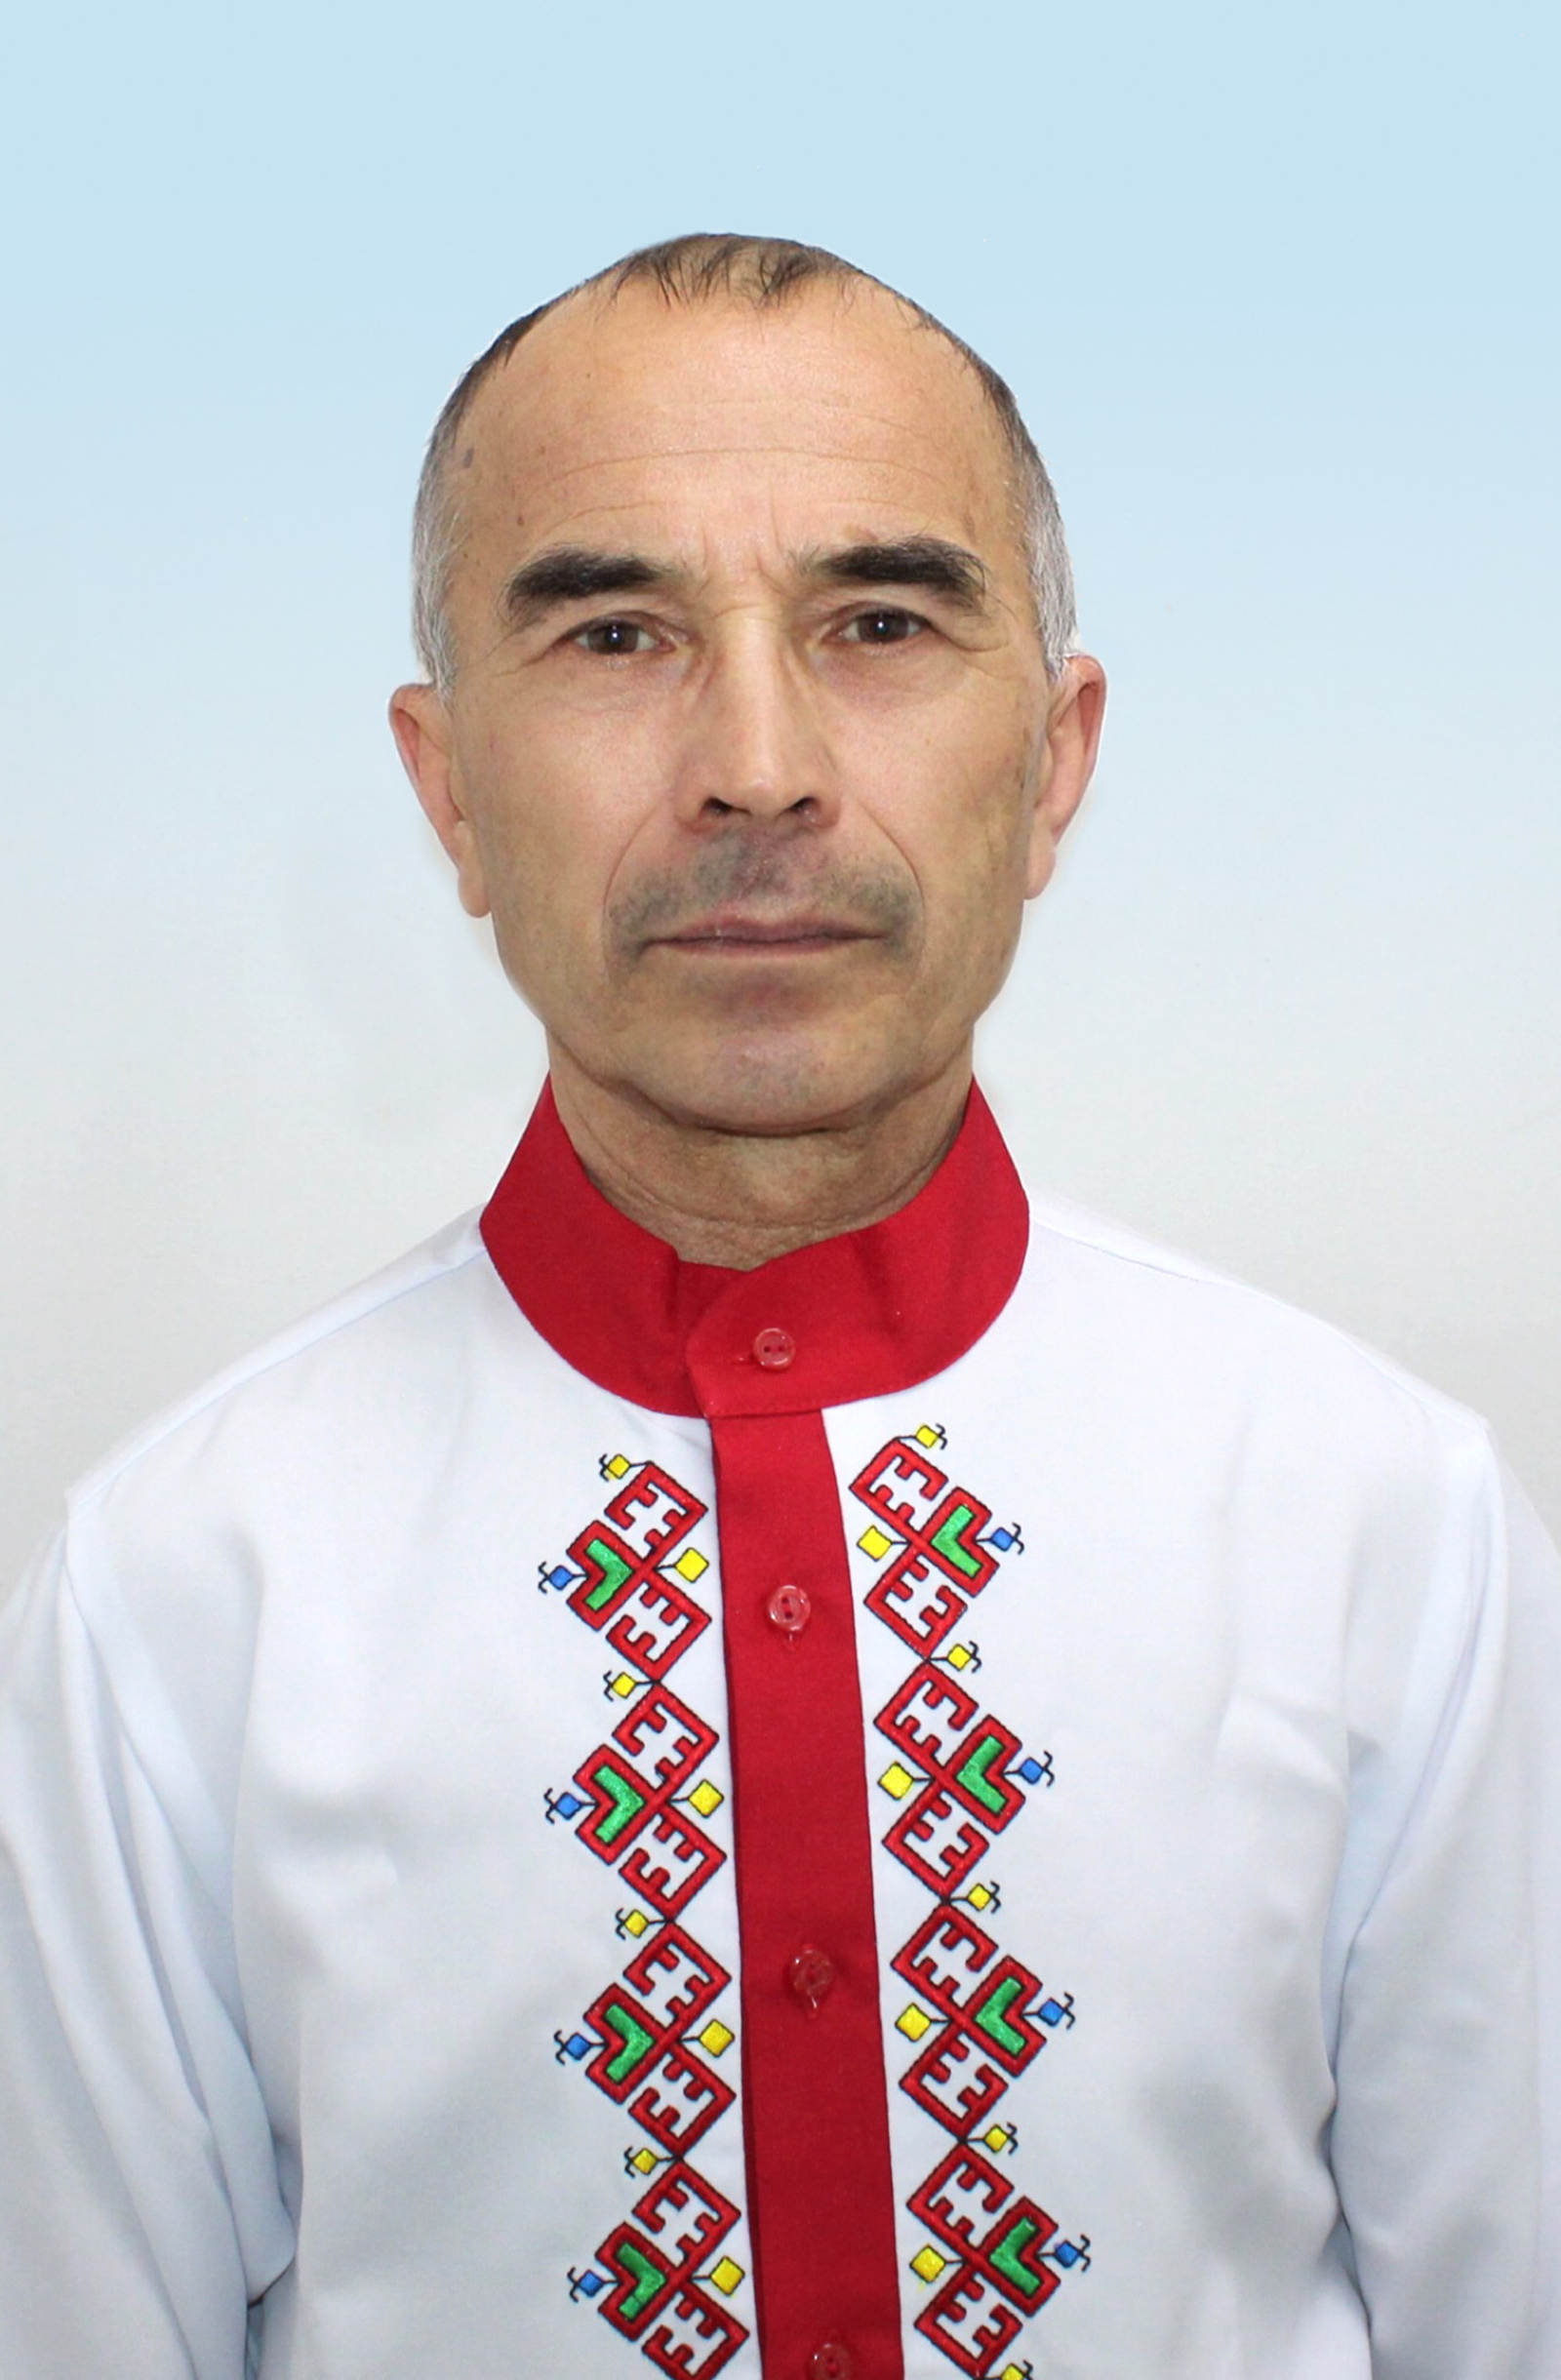 Александр Егоров, сăвăçă.